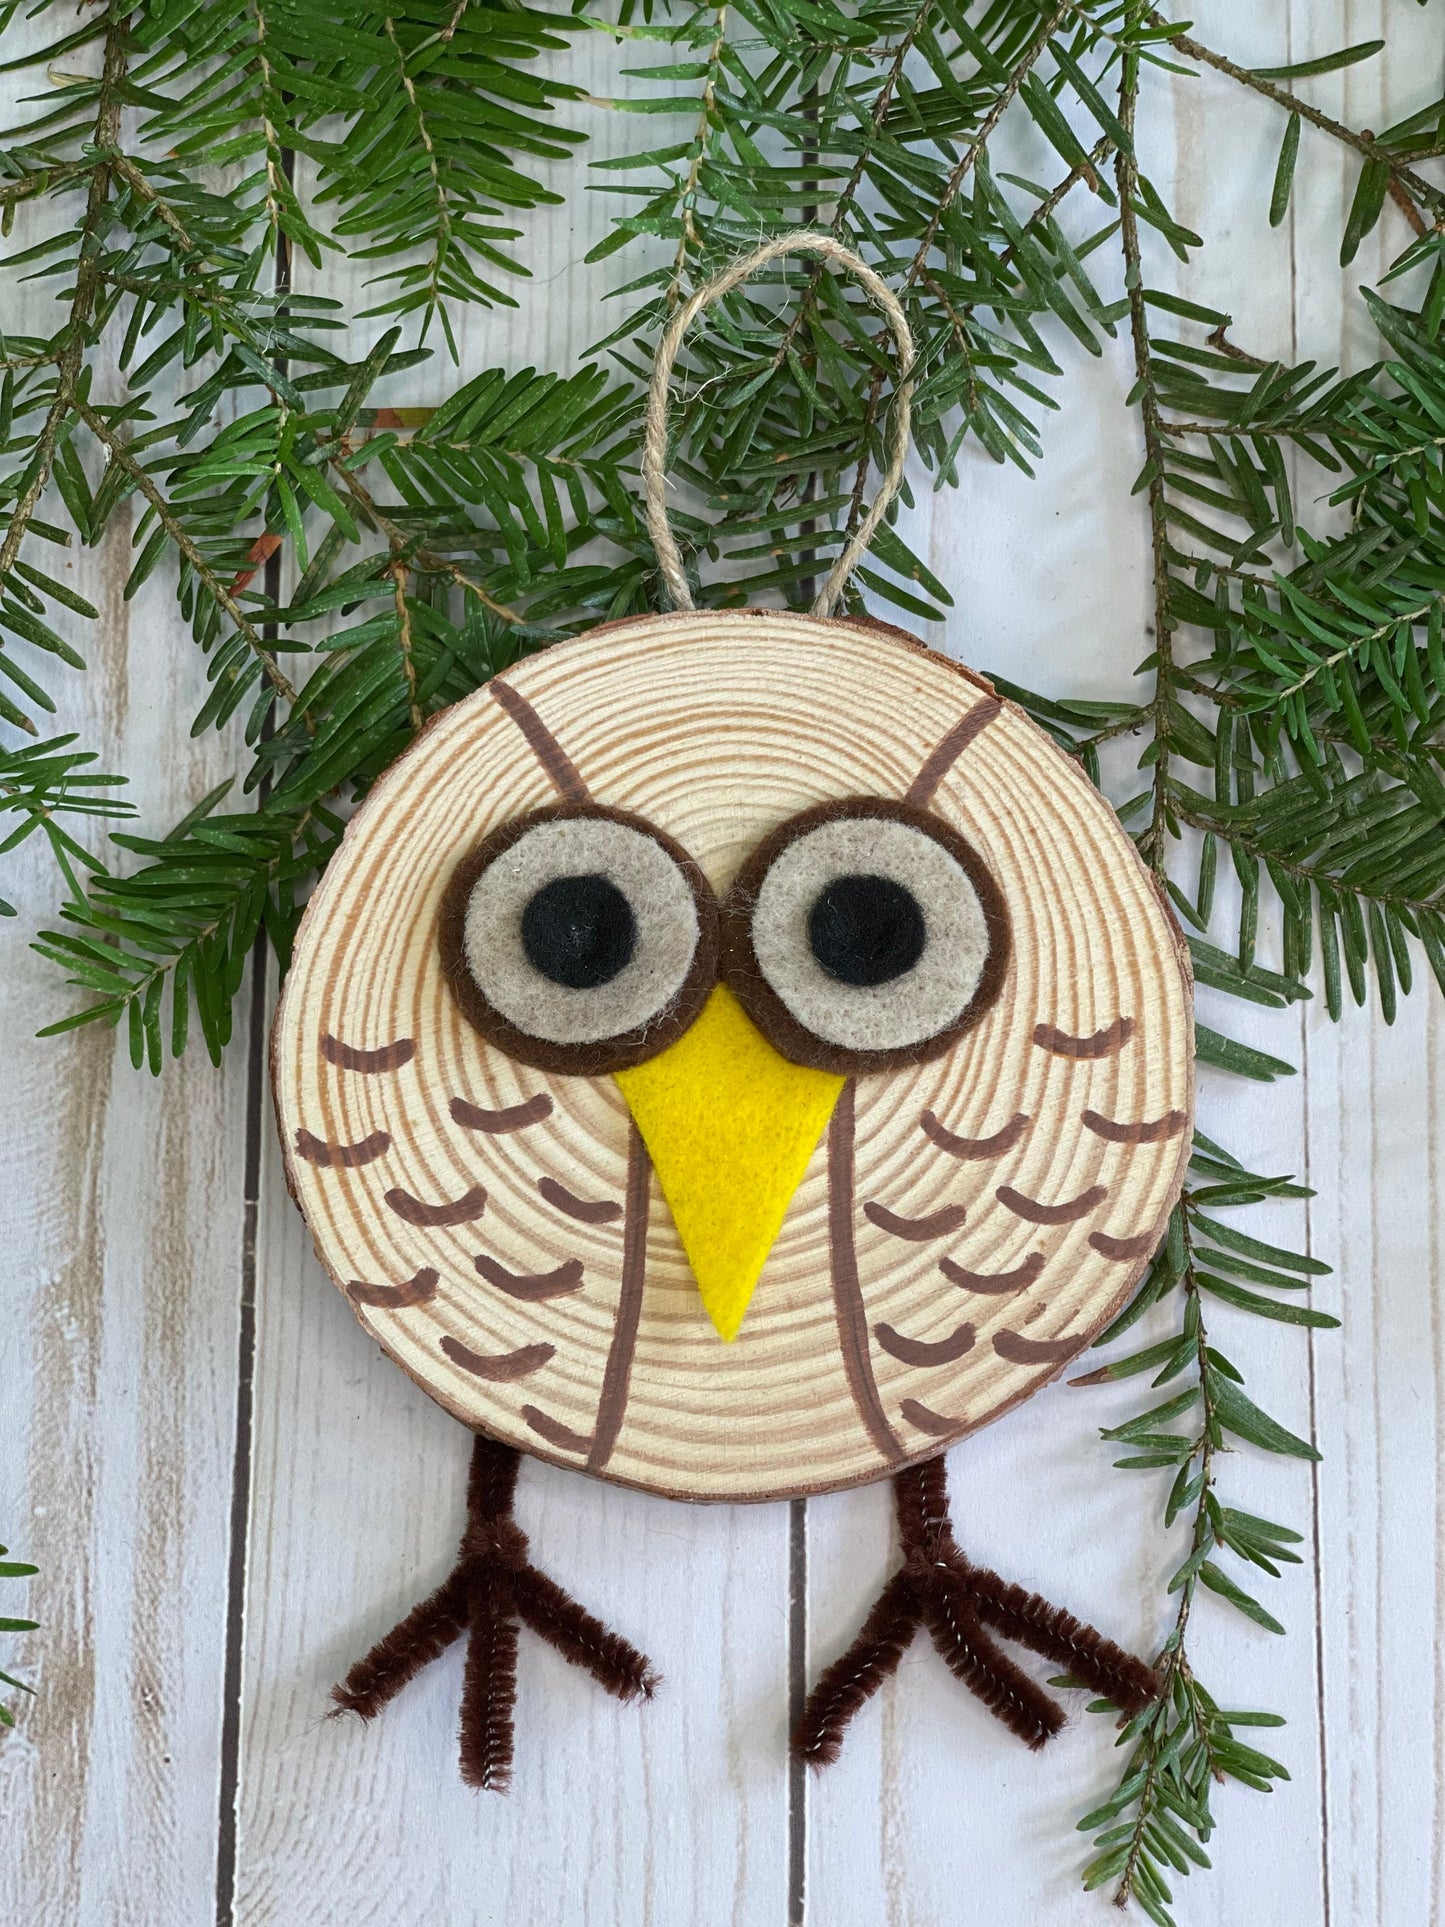 Wood Slice Ornament - Animal Christmas Ornament - Woodland Animals - Christmas Tree Decorations